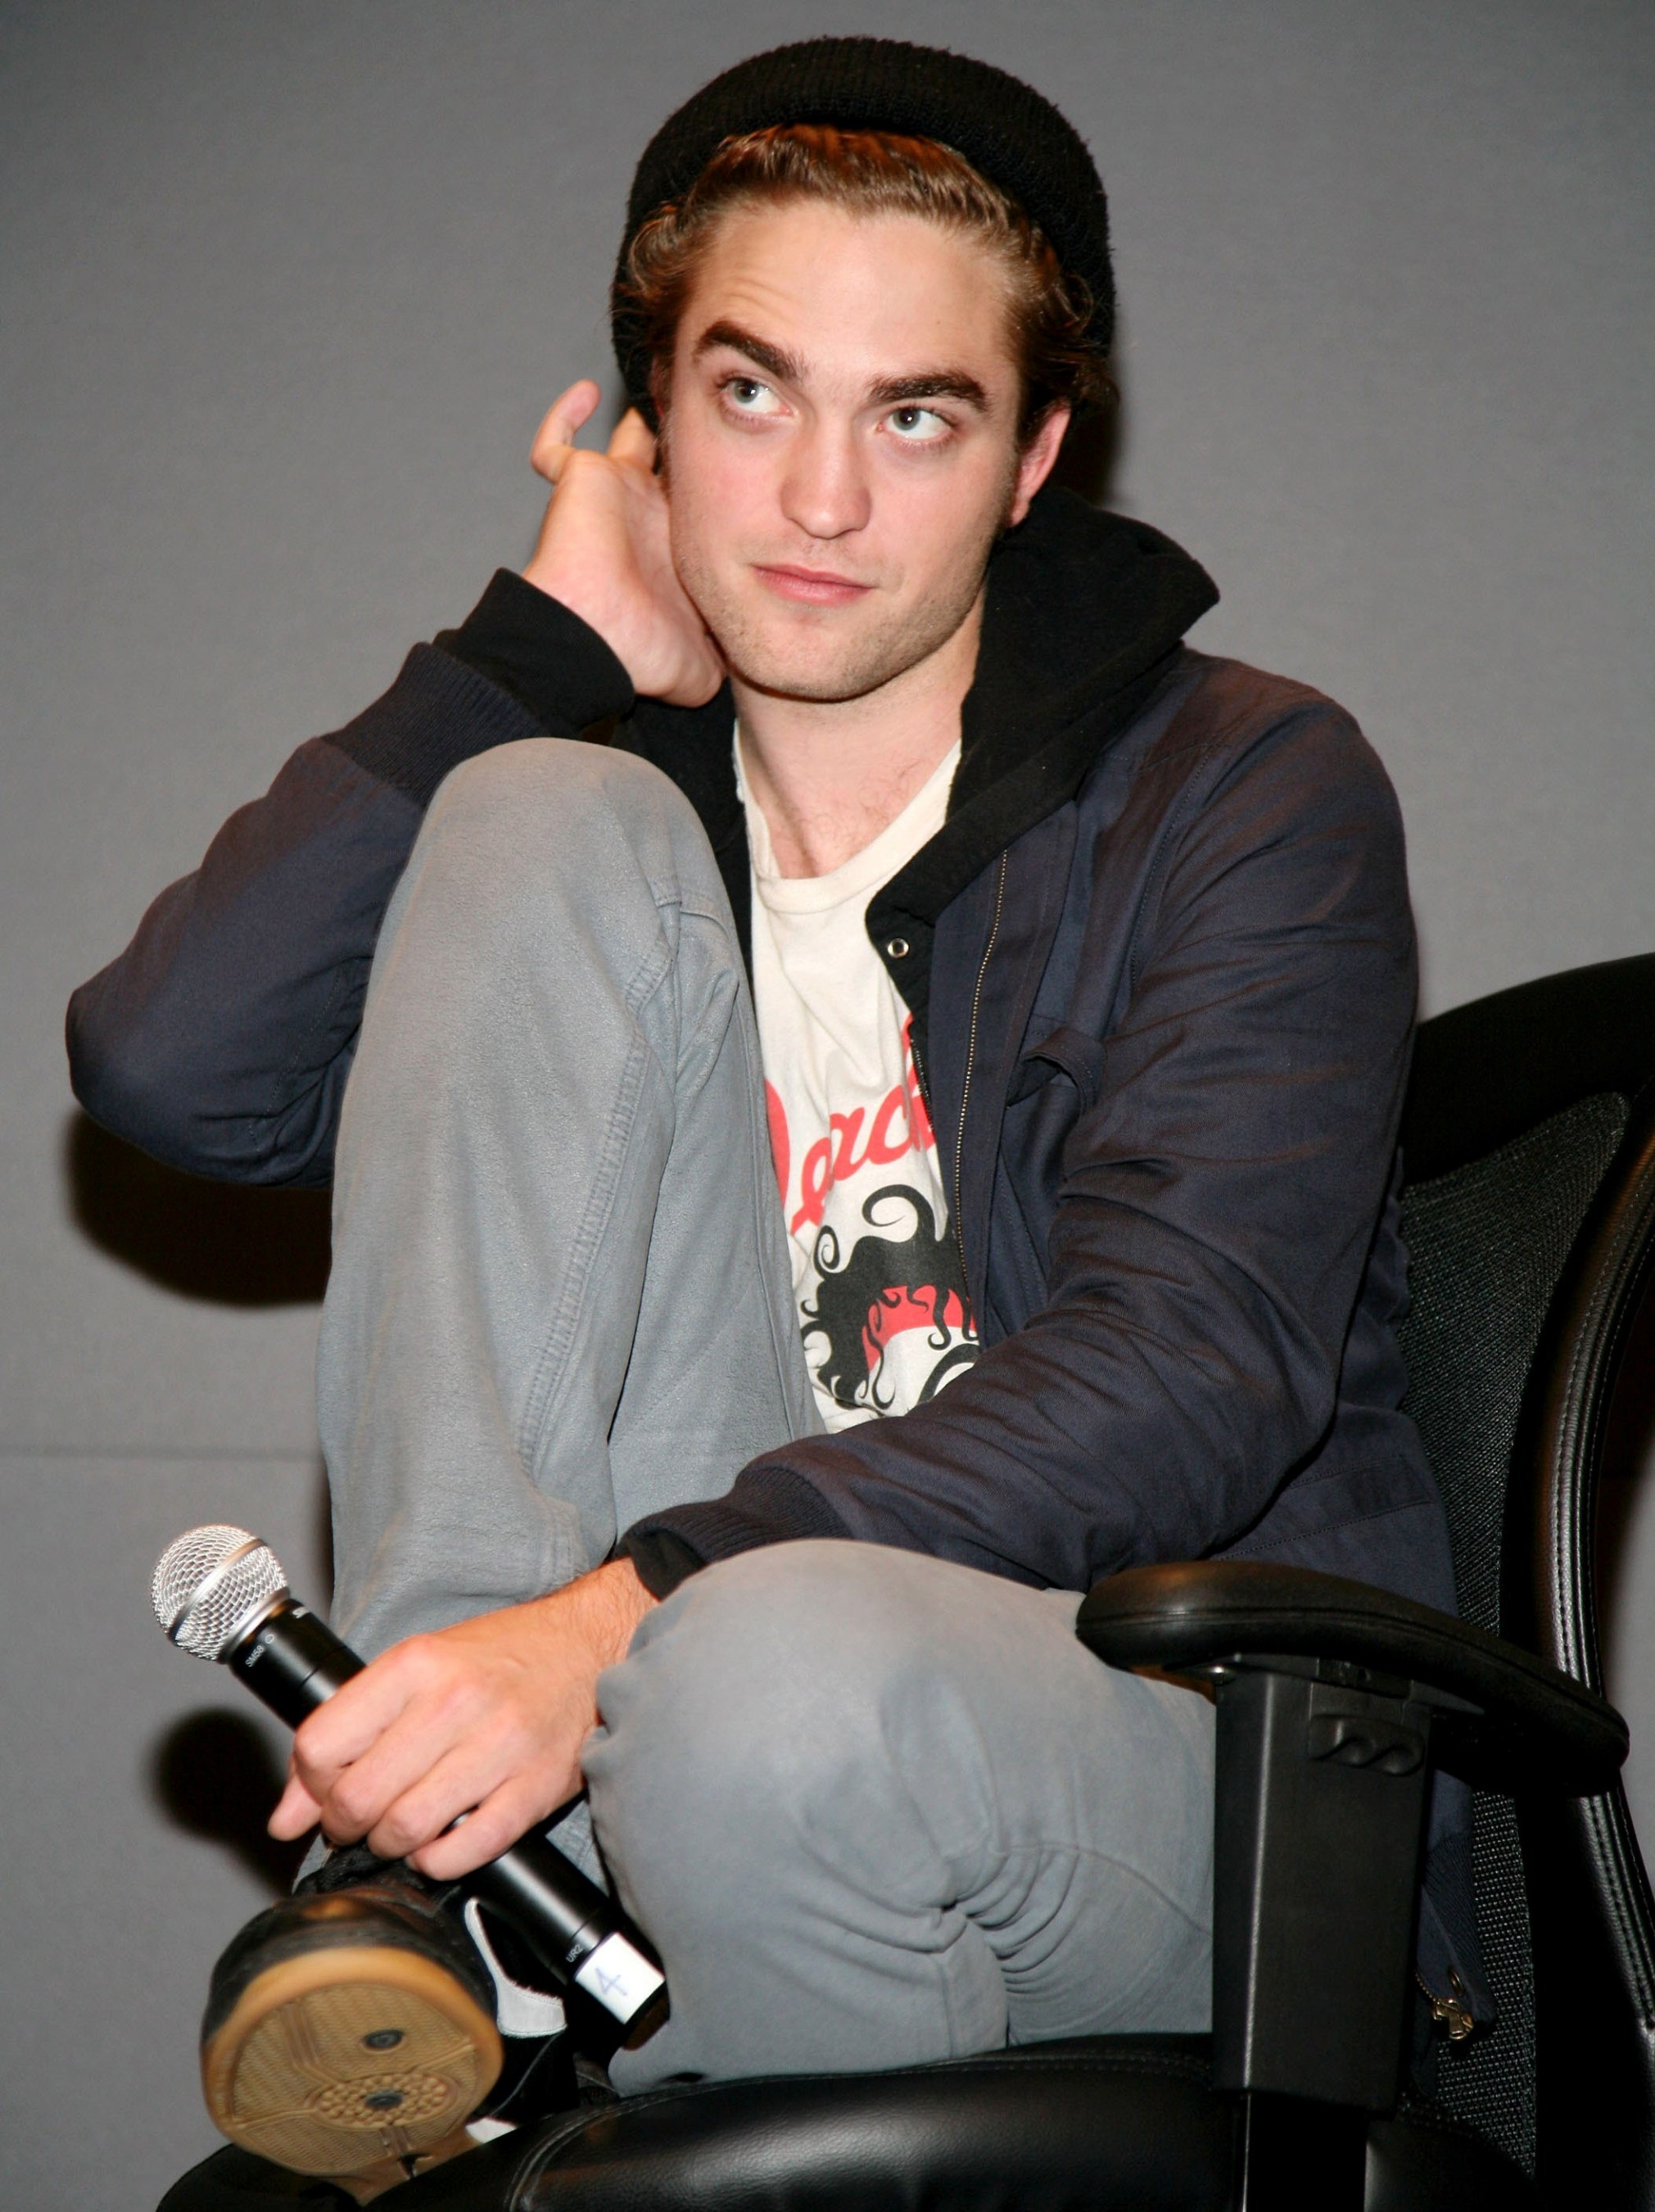 Robert Pattinson photo 183 of 842 pics, wallpaper - photo #155840 ...